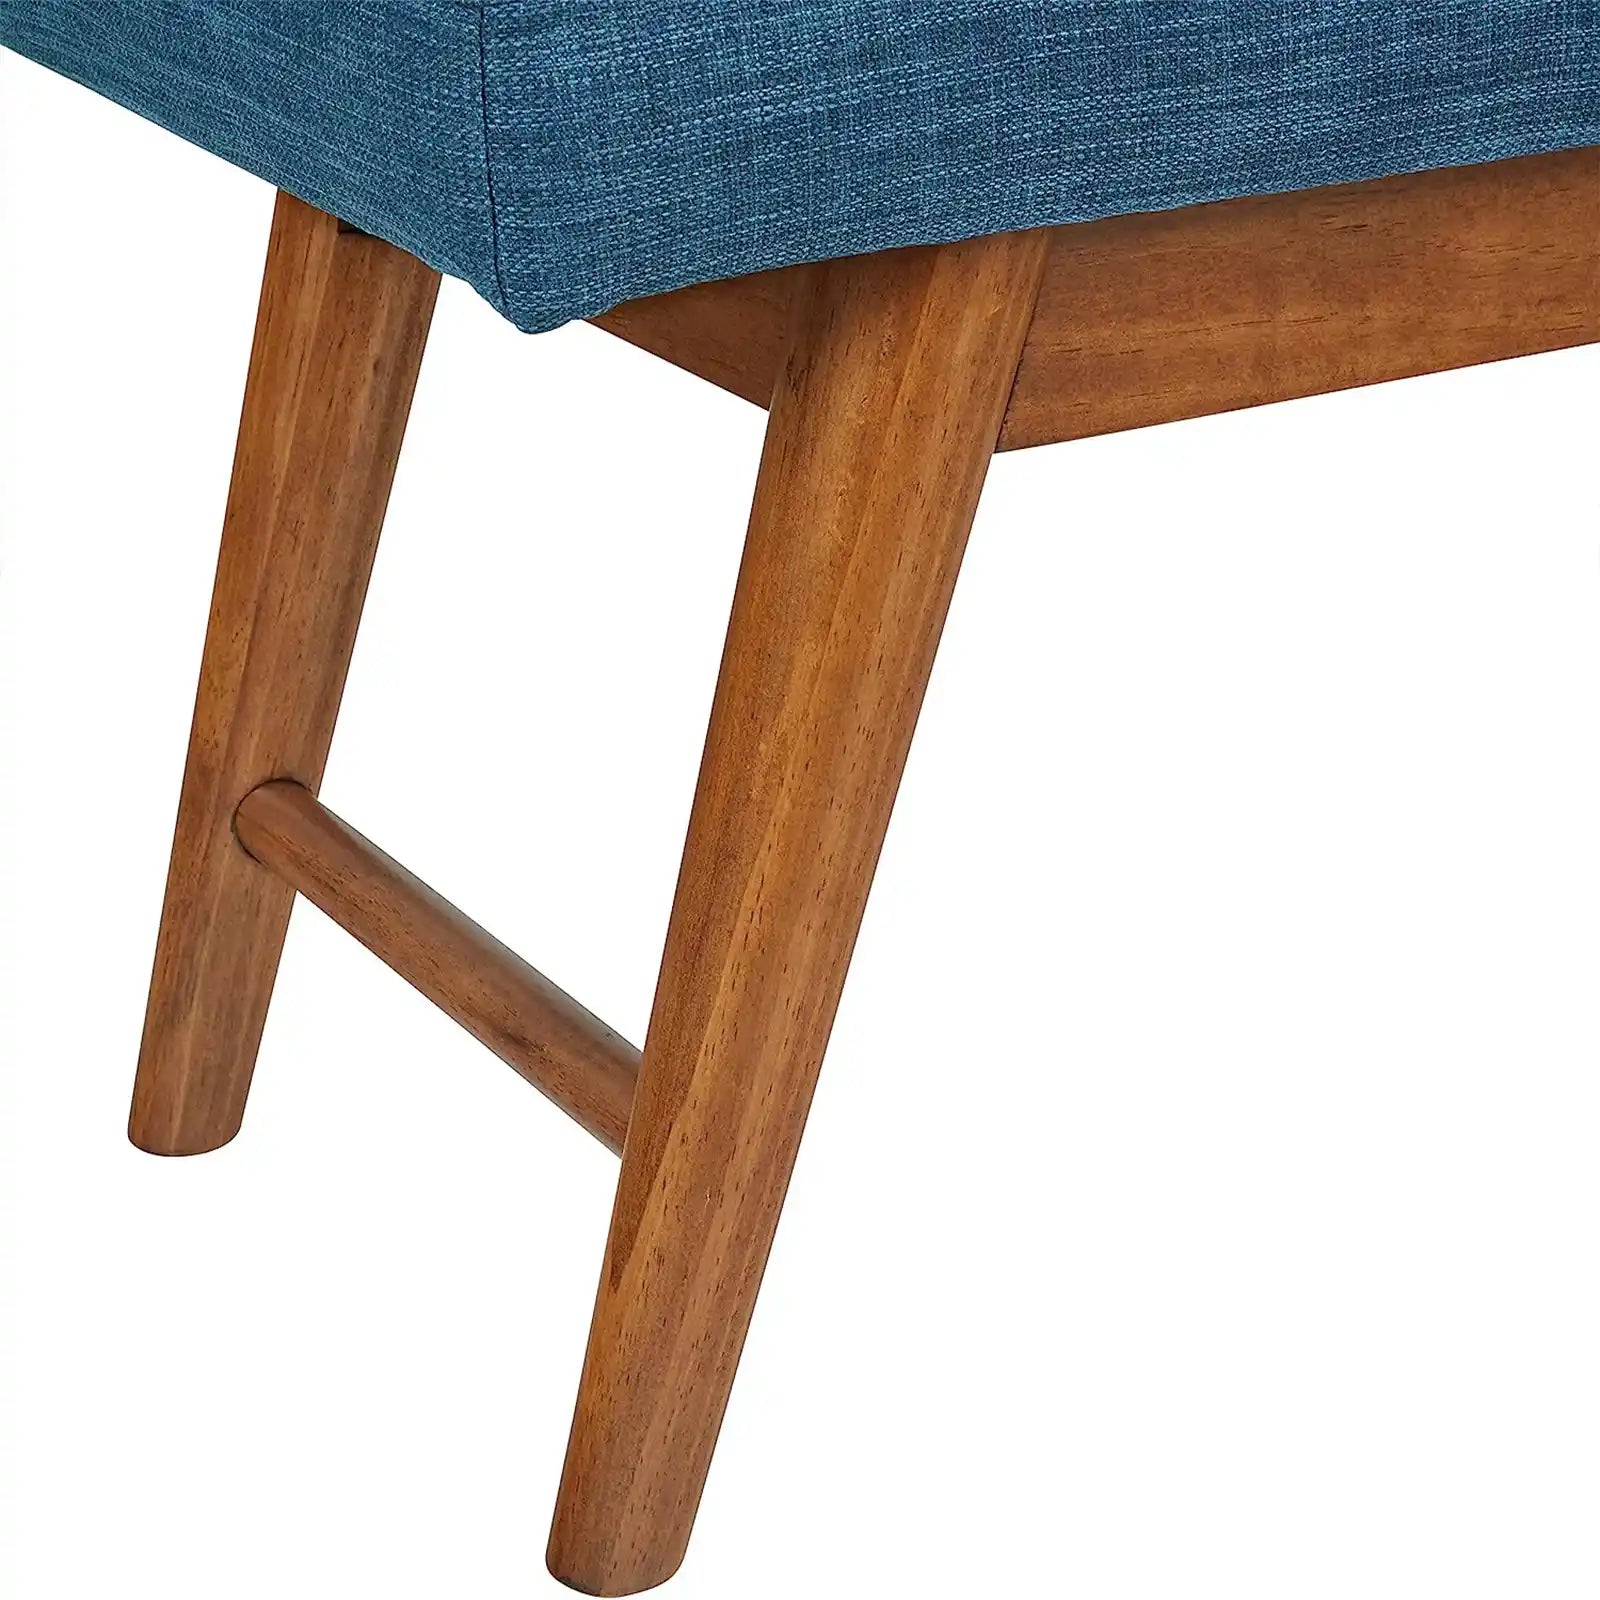 Modern Haraden Upholstered Button-Tufted Bench, Blue